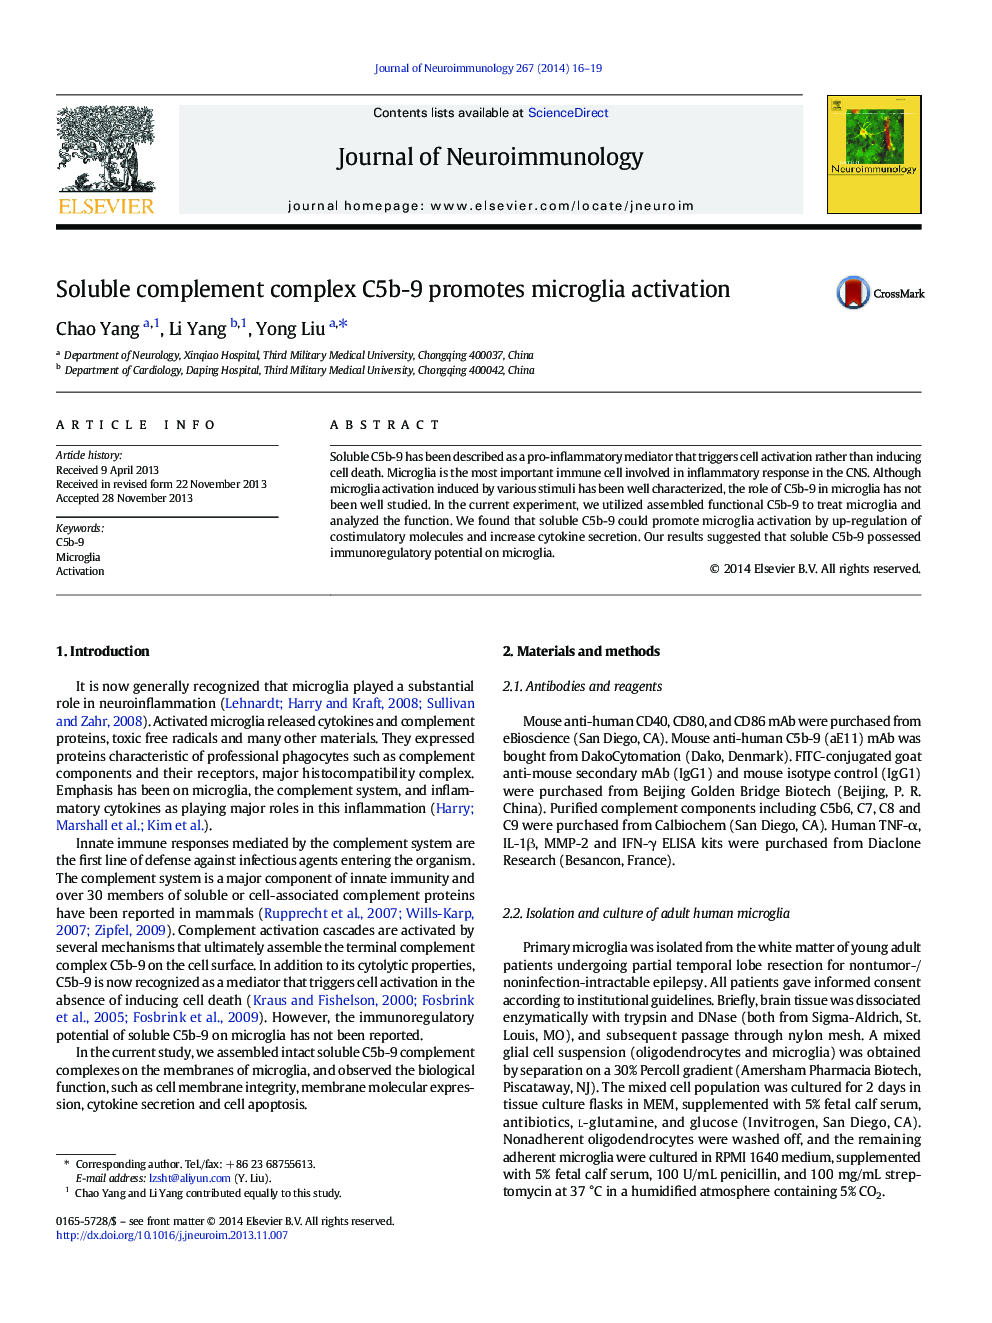 Soluble complement complex C5b-9 promotes microglia activation